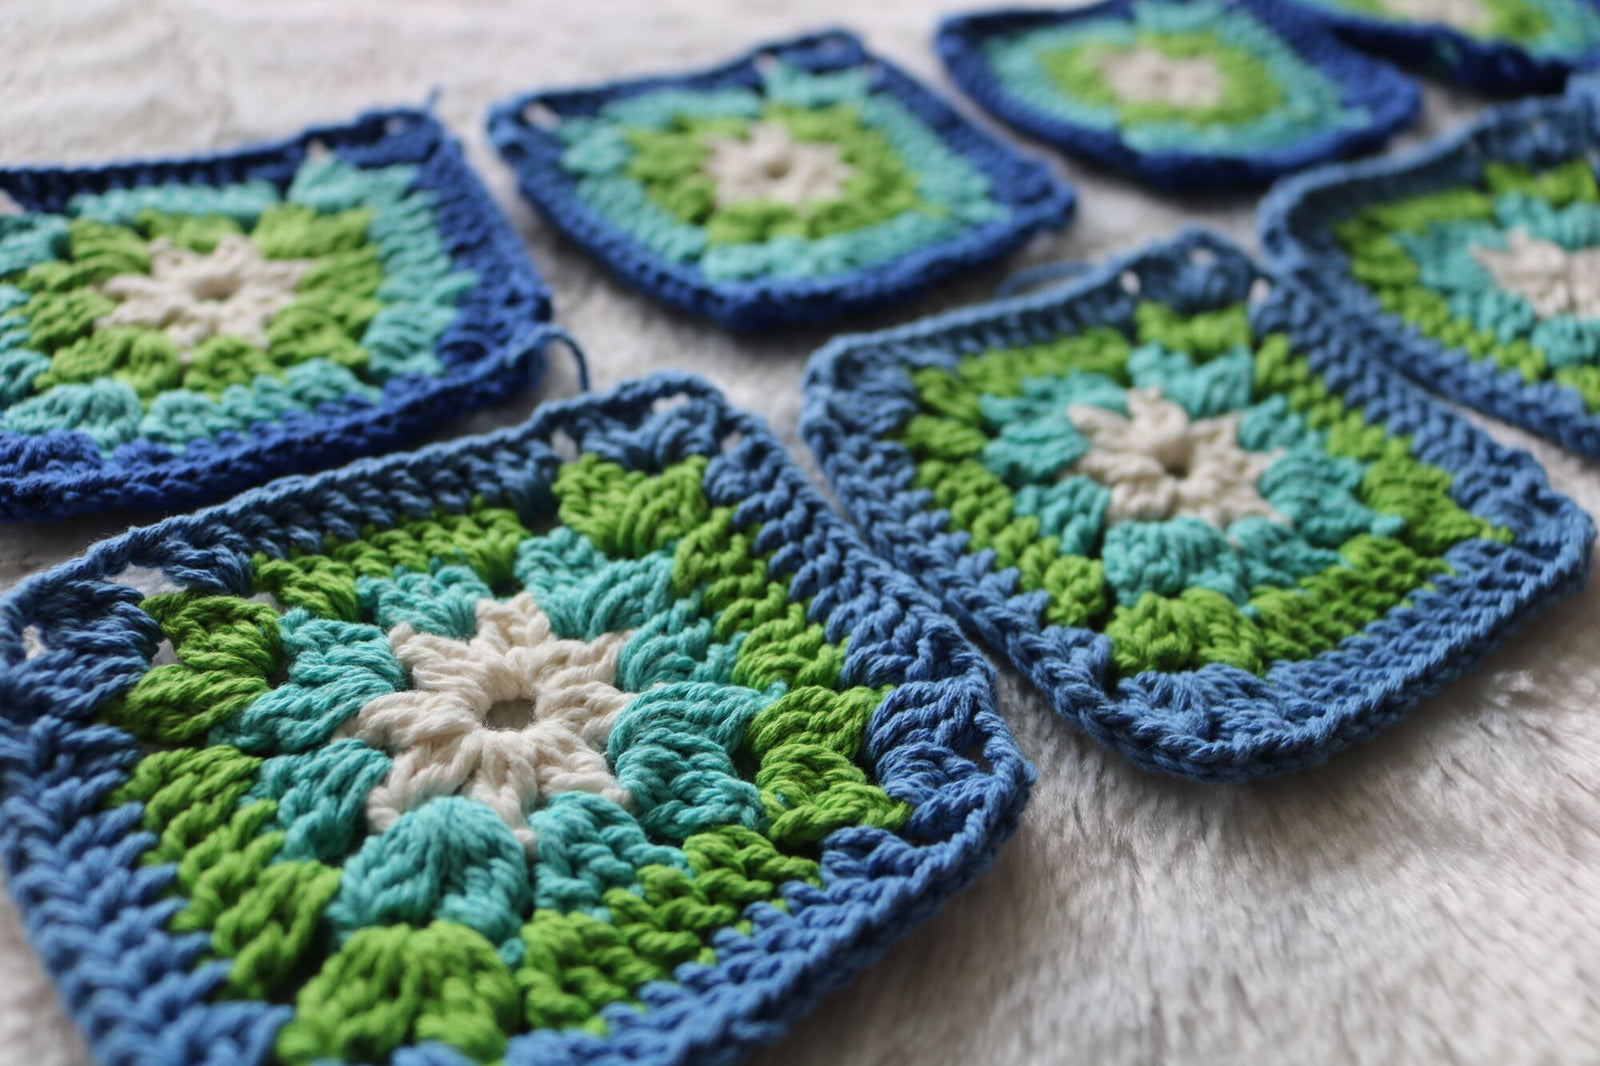 Skein 50g Chunky Yarn Crochet Sweater Hand Knitting Wool Baby 3mm or 4mm Crochet Hooks Knitting, Blue